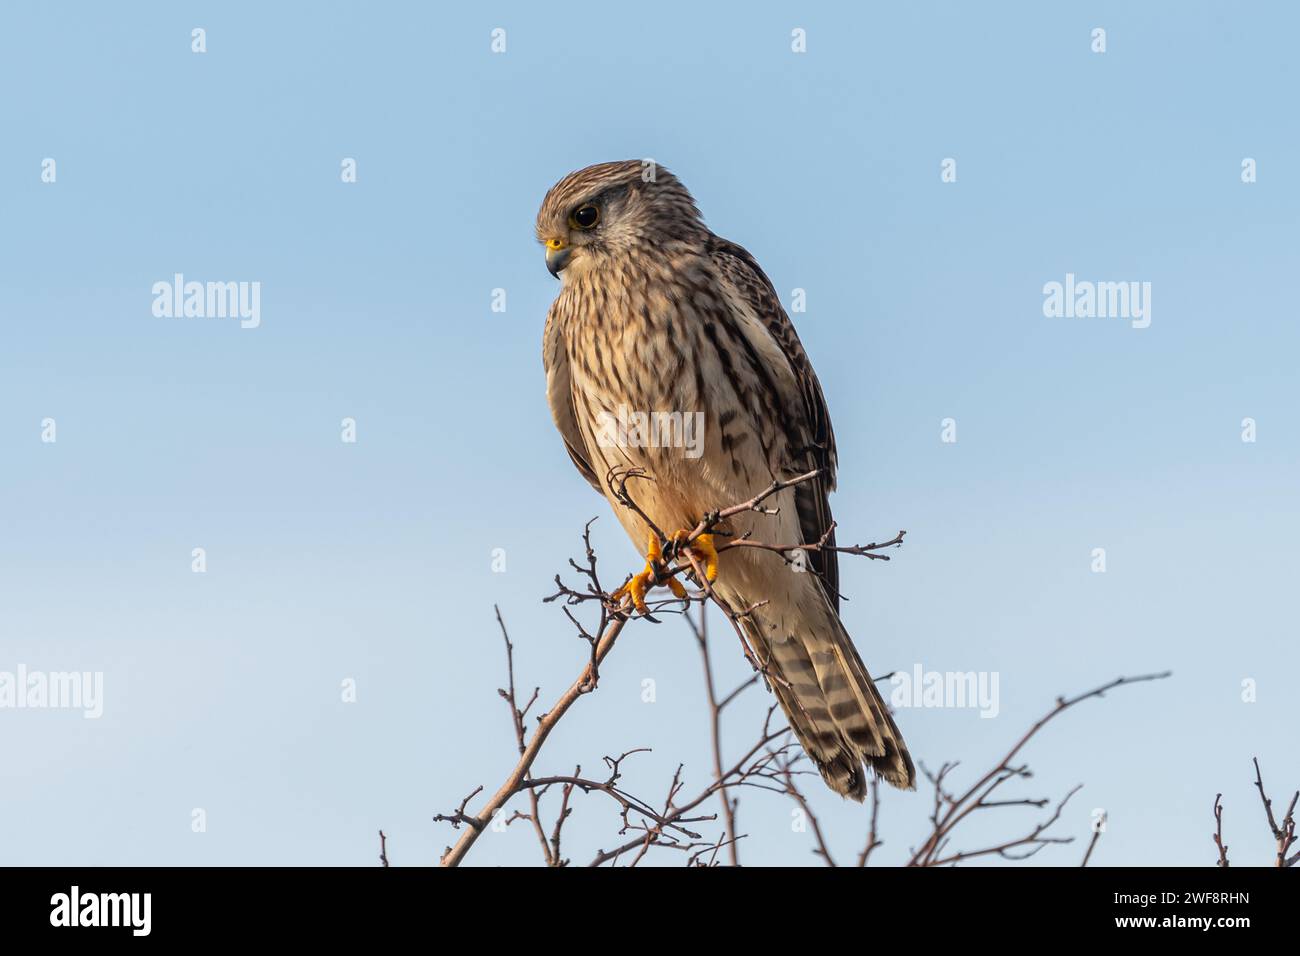 Kestrel (Falco tinnunculus) bird perched in tree, England, UK Stock Photo